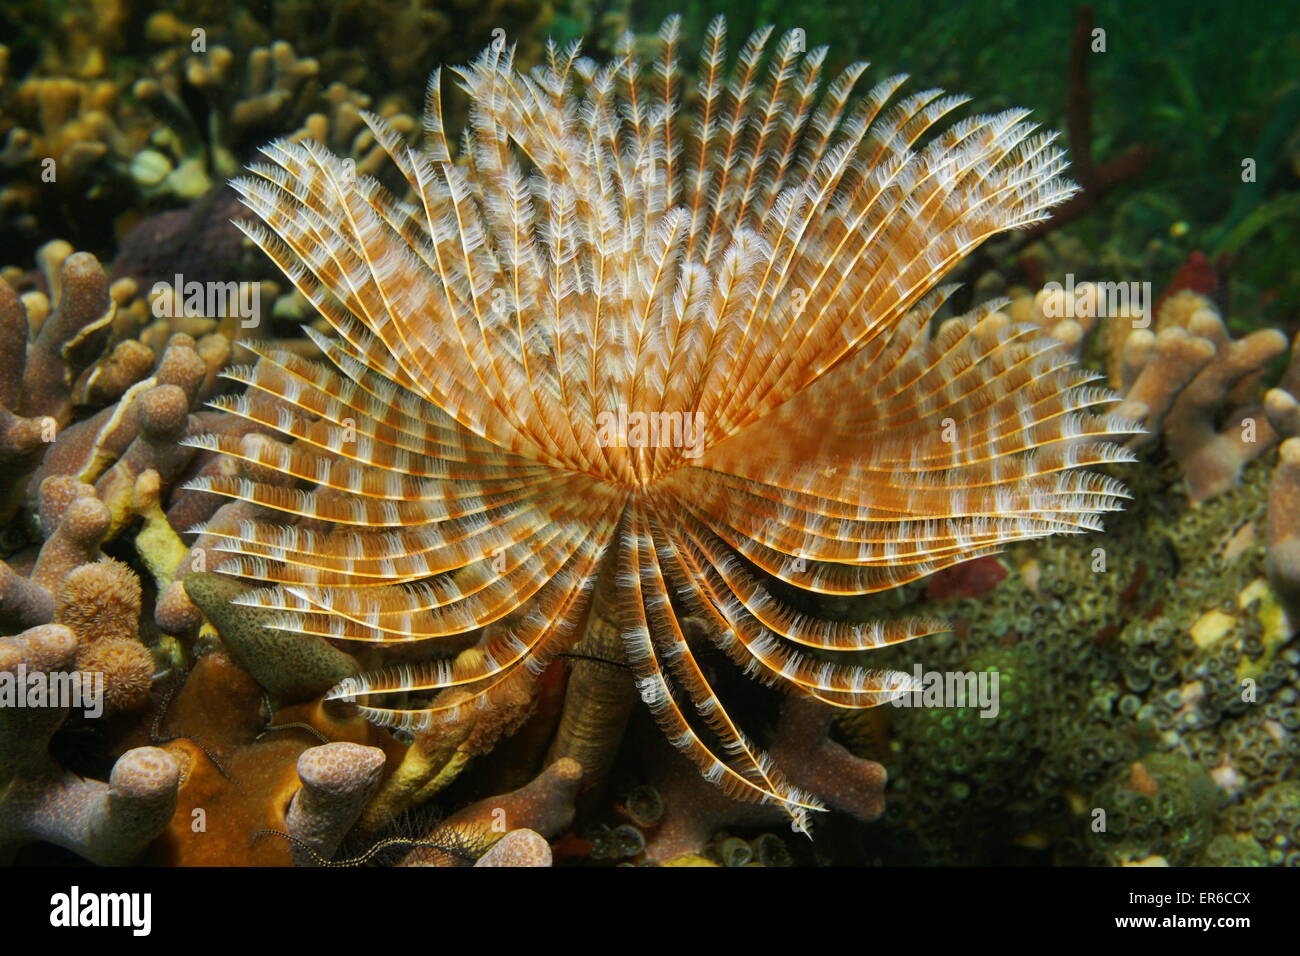 Criatura marina, magníficas Plumero gusano, Sabellastarte magnifica, mar Caribe Foto de stock